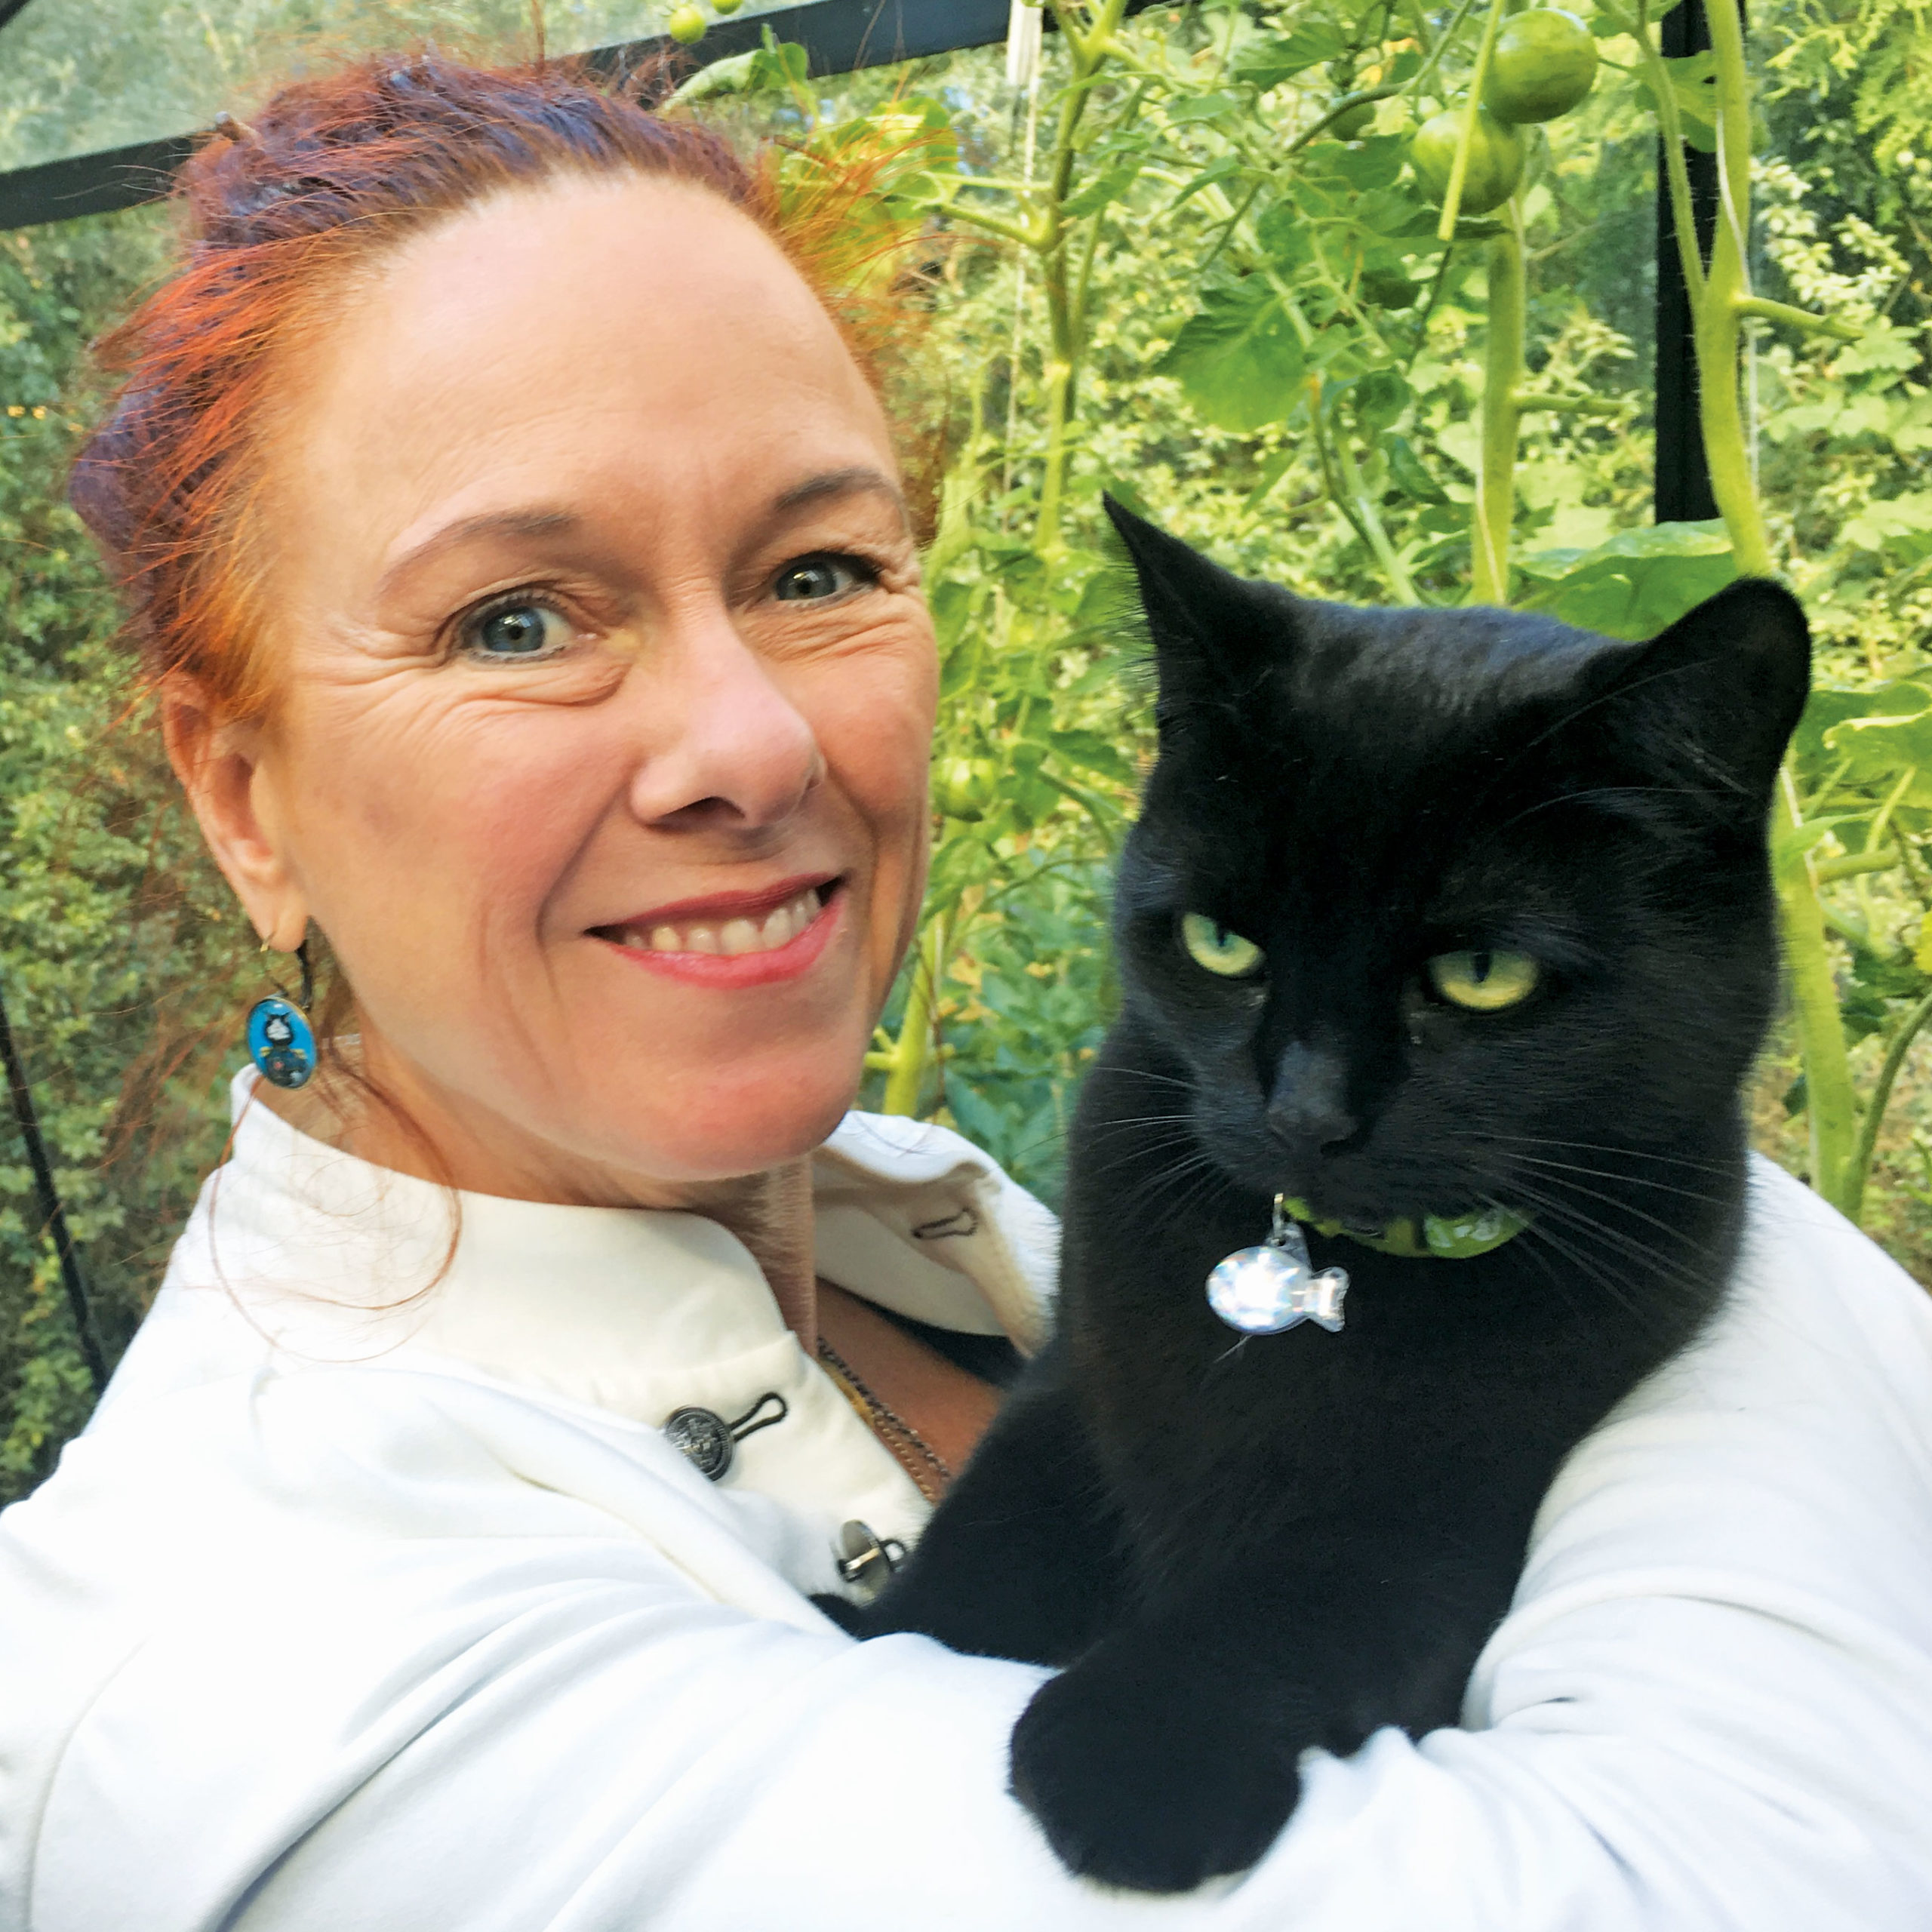 Dr. Susanne Schötz and her cat.